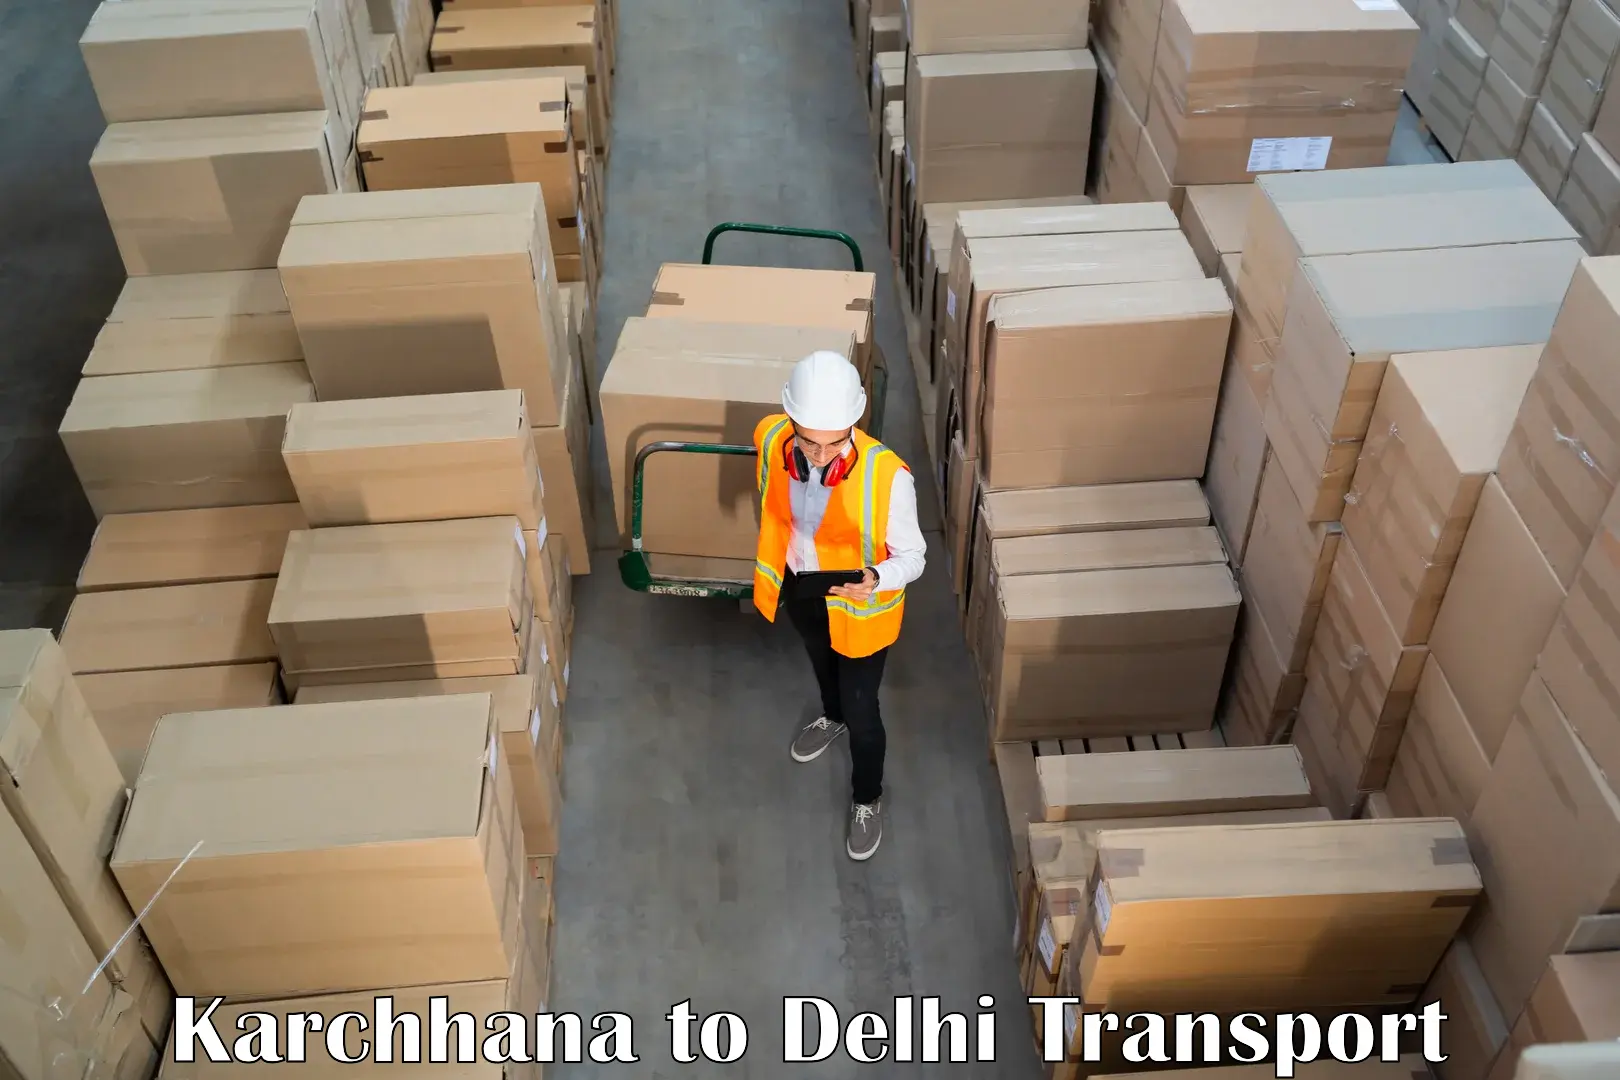 Goods delivery service Karchhana to Delhi